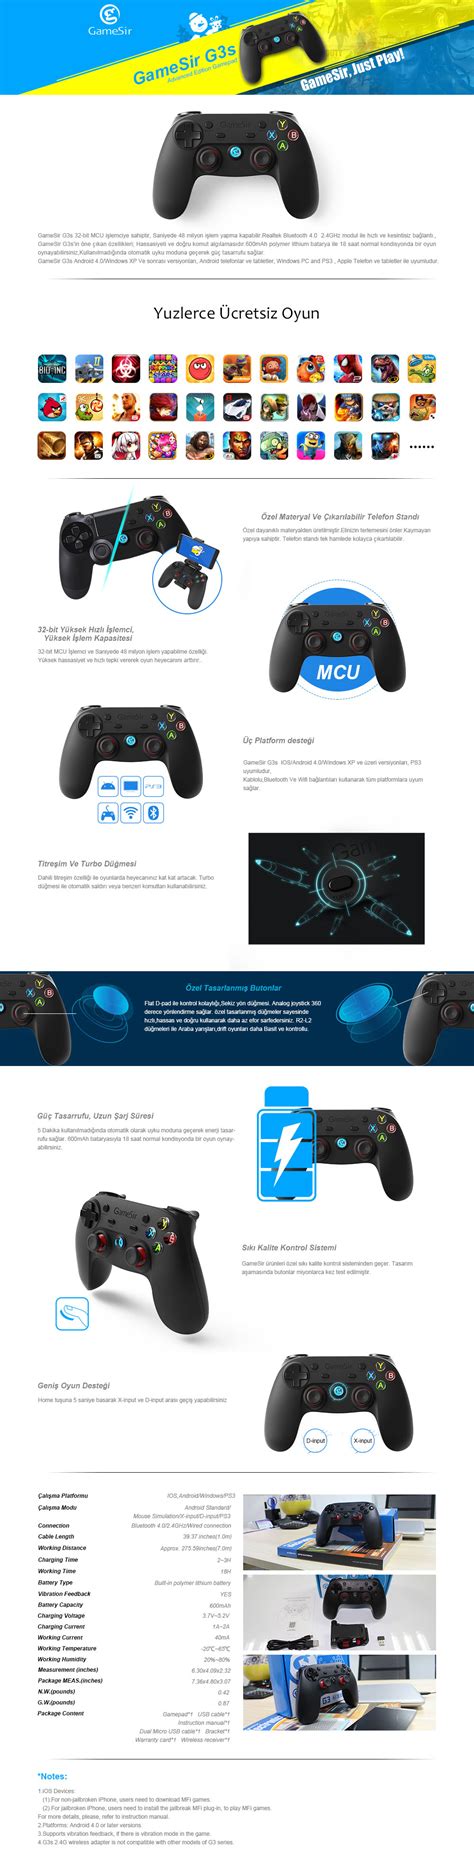 gamesir gs kablosuz bluetooth joystick oyun kolu konsolu fiyati